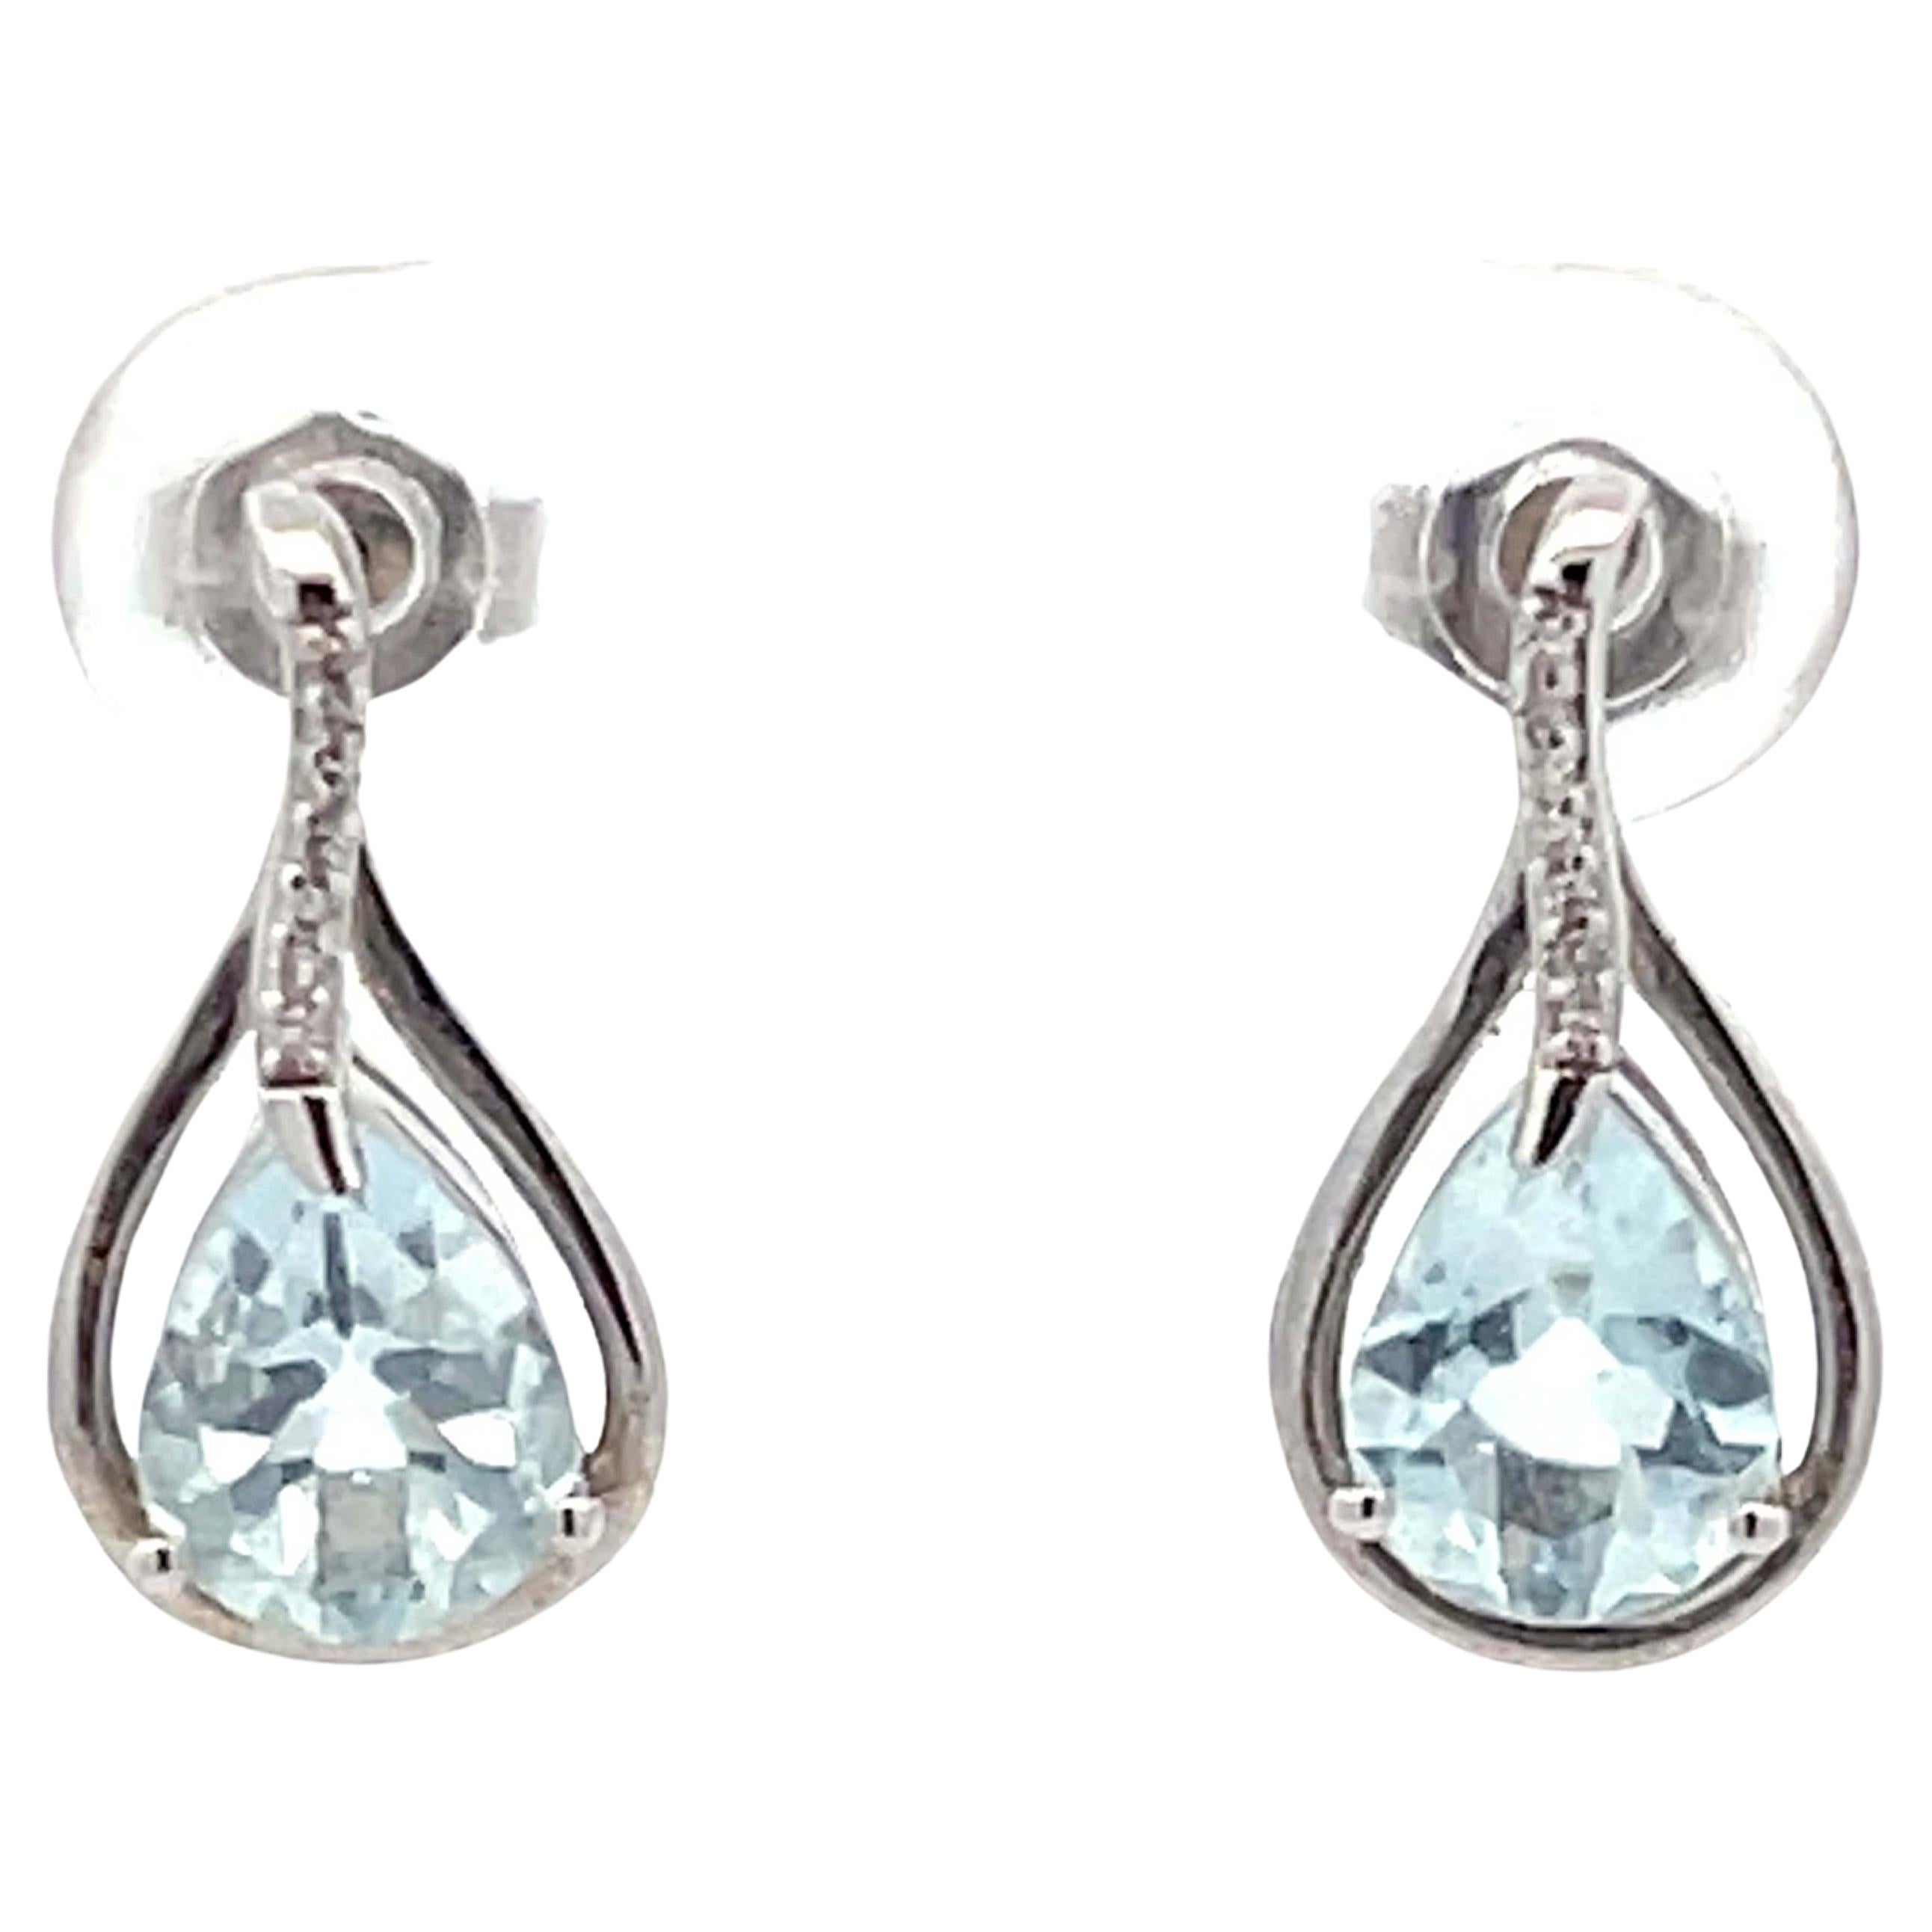 Pear Shaped Aquamarine and Diamond Drop Earrings in 14k White Gold 